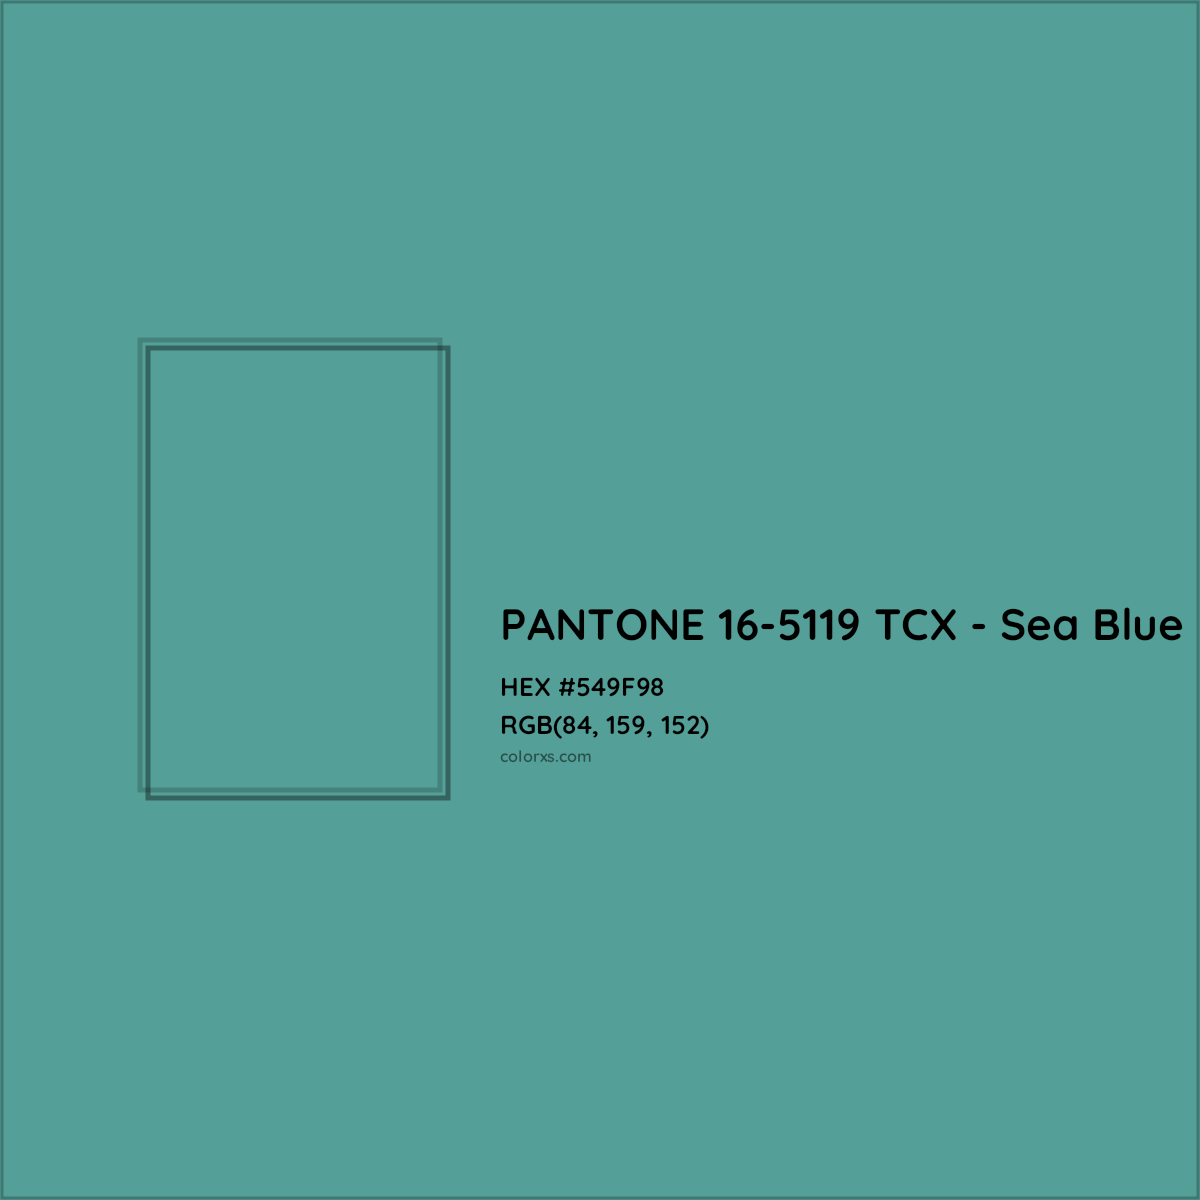 HEX #549F98 PANTONE 16-5119 TCX - Sea Blue CMS Pantone TCX - Color Code